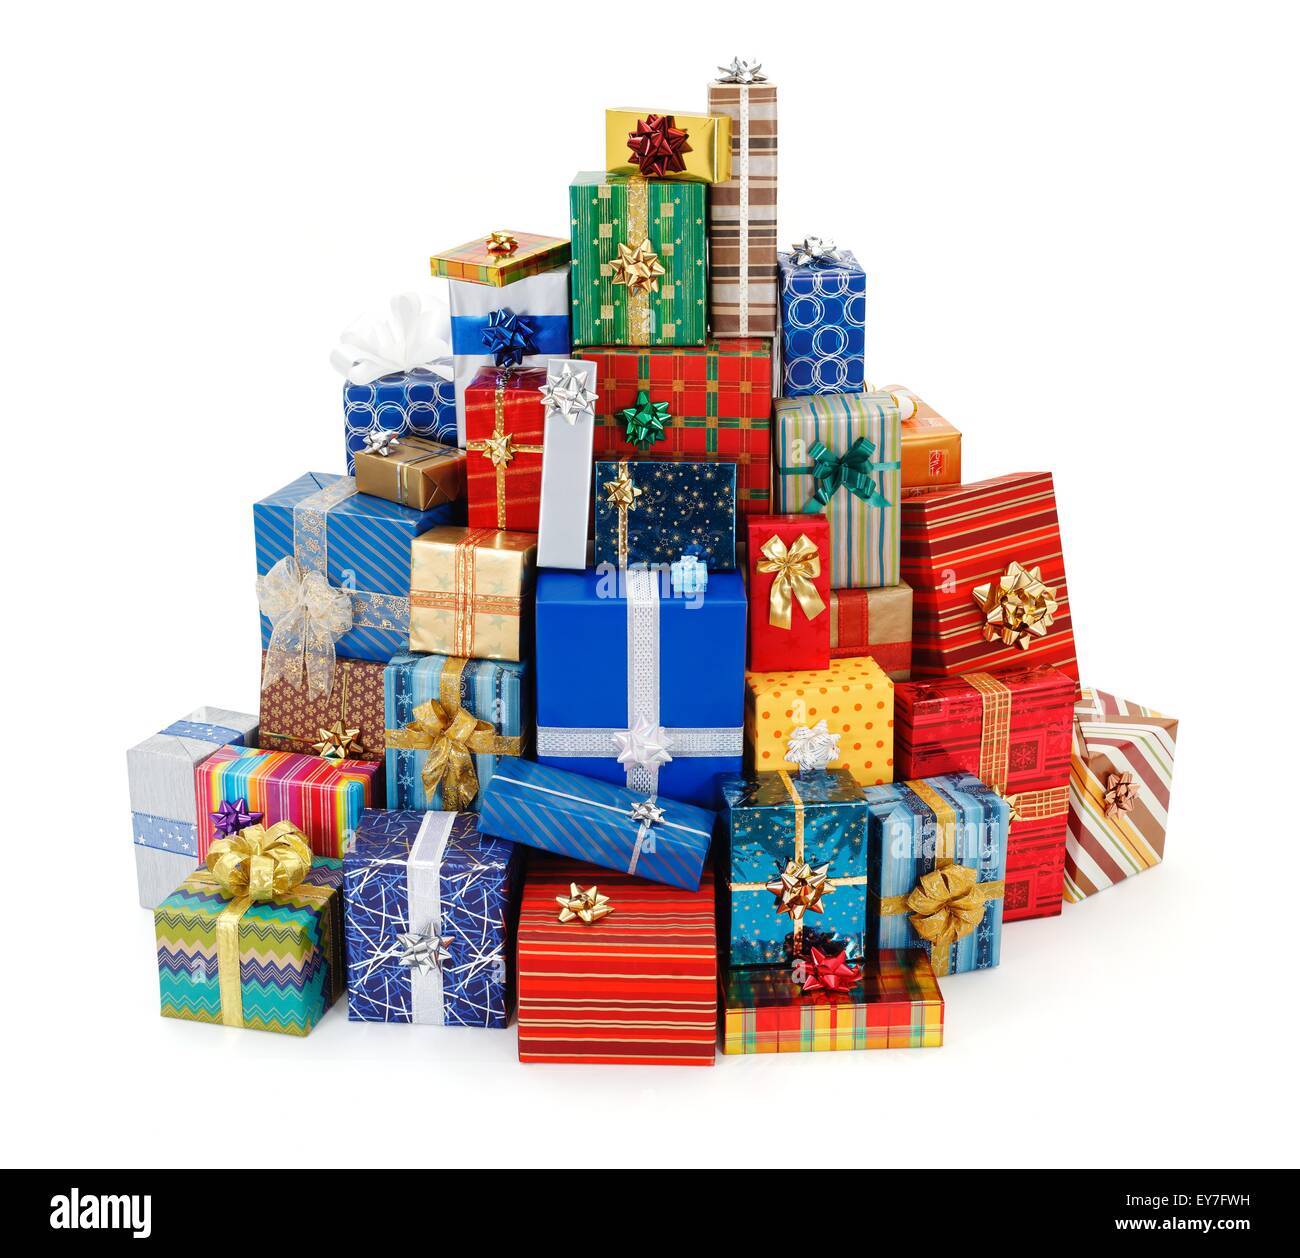 Big stack of colorful Christmas presents Stock Photo